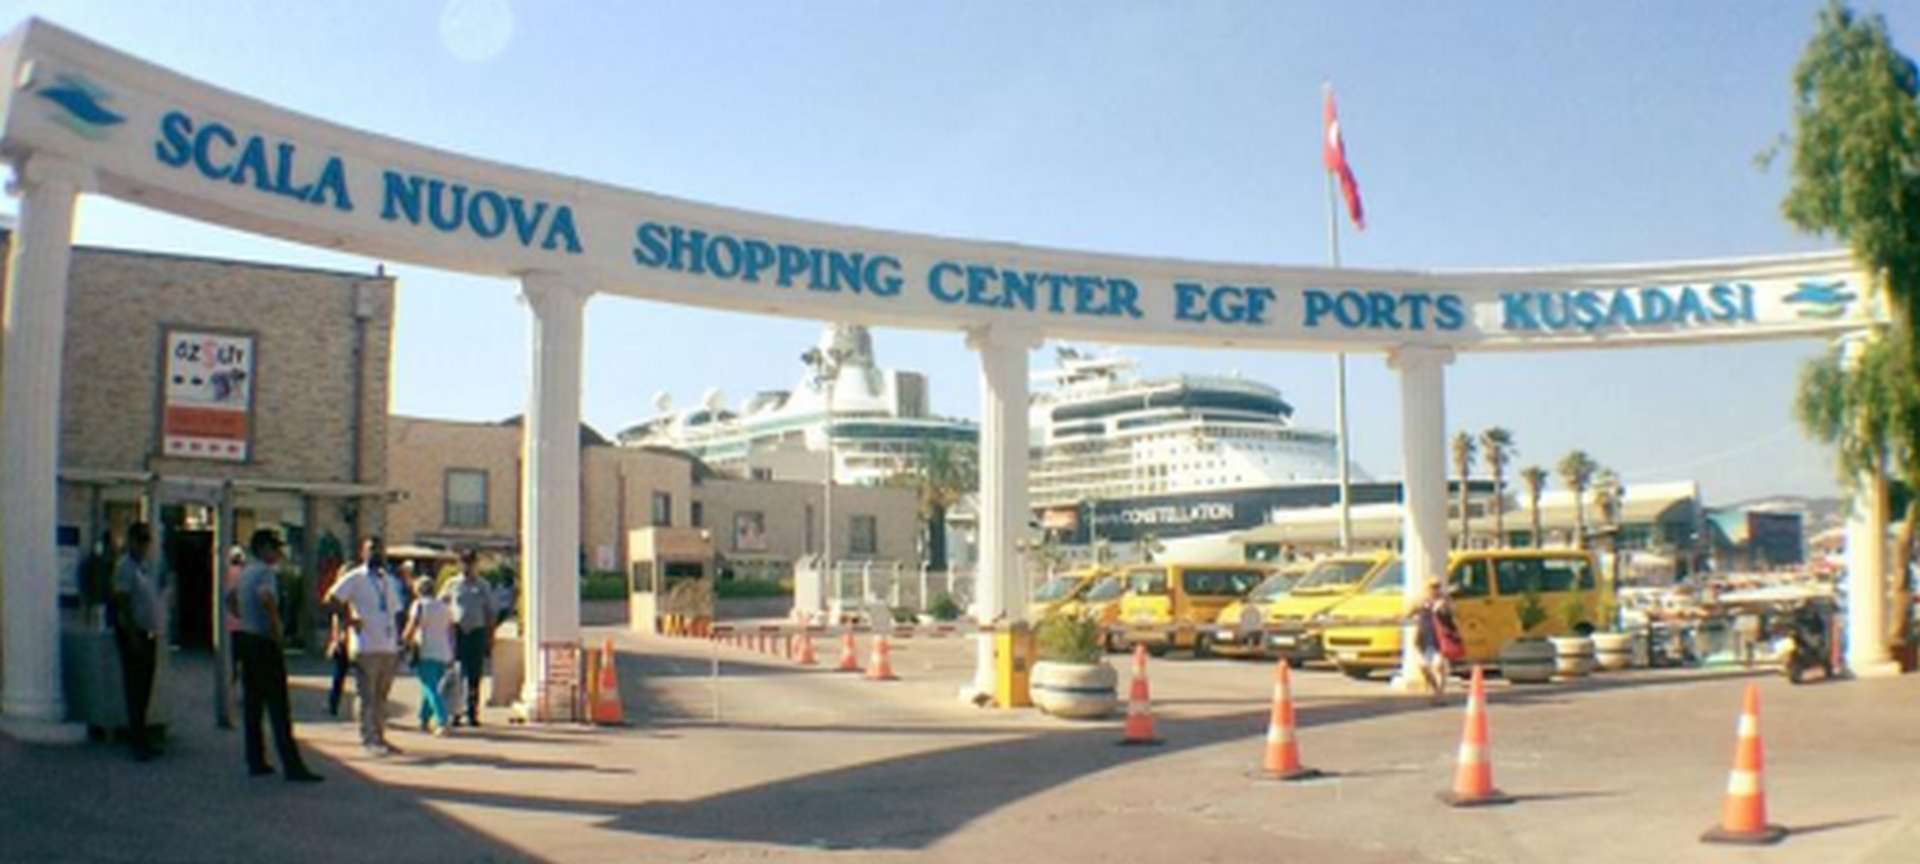 Scala Nuova Shopping Center Ege Ports Kuşadası